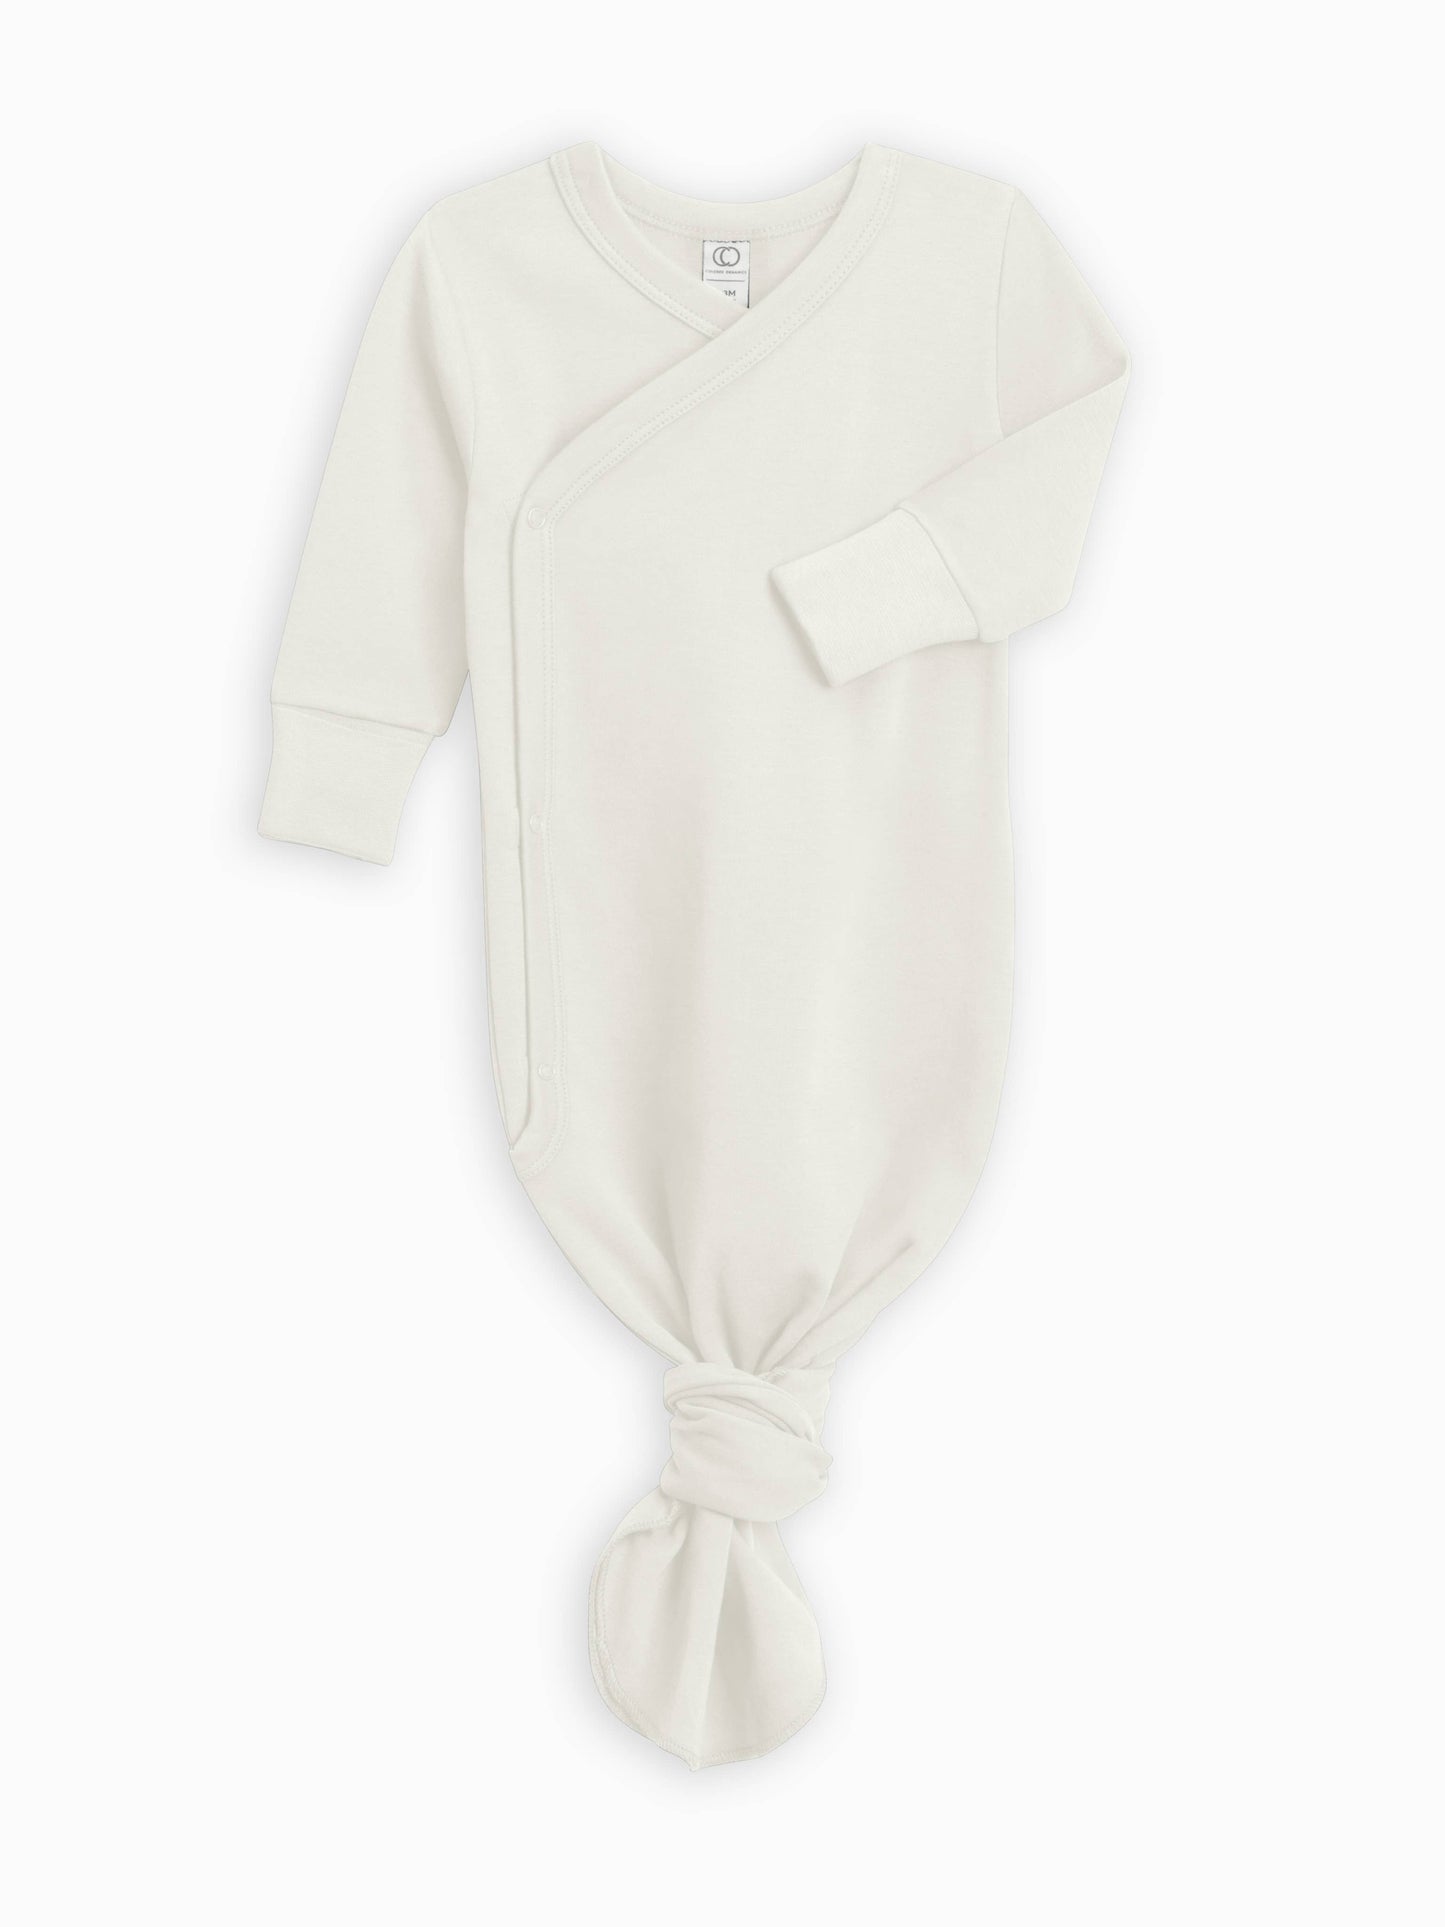 Colored Organics - Organic Newborn Indy Kimono Gown - Ivory